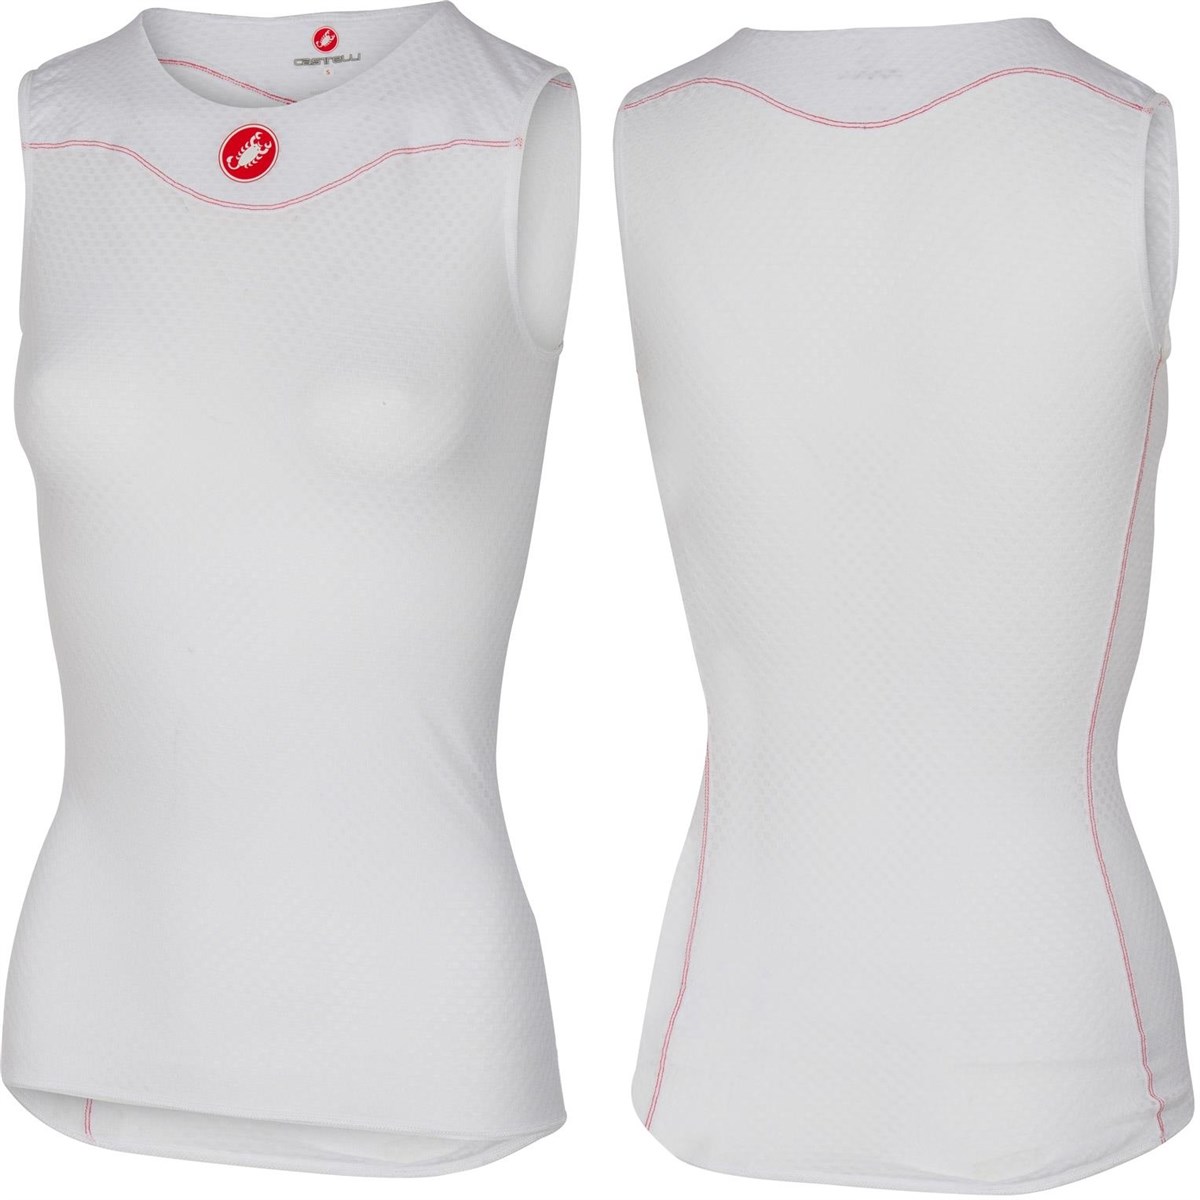 Castelli Pro Issue Womens Cycling Sleeveless Base Layer product image